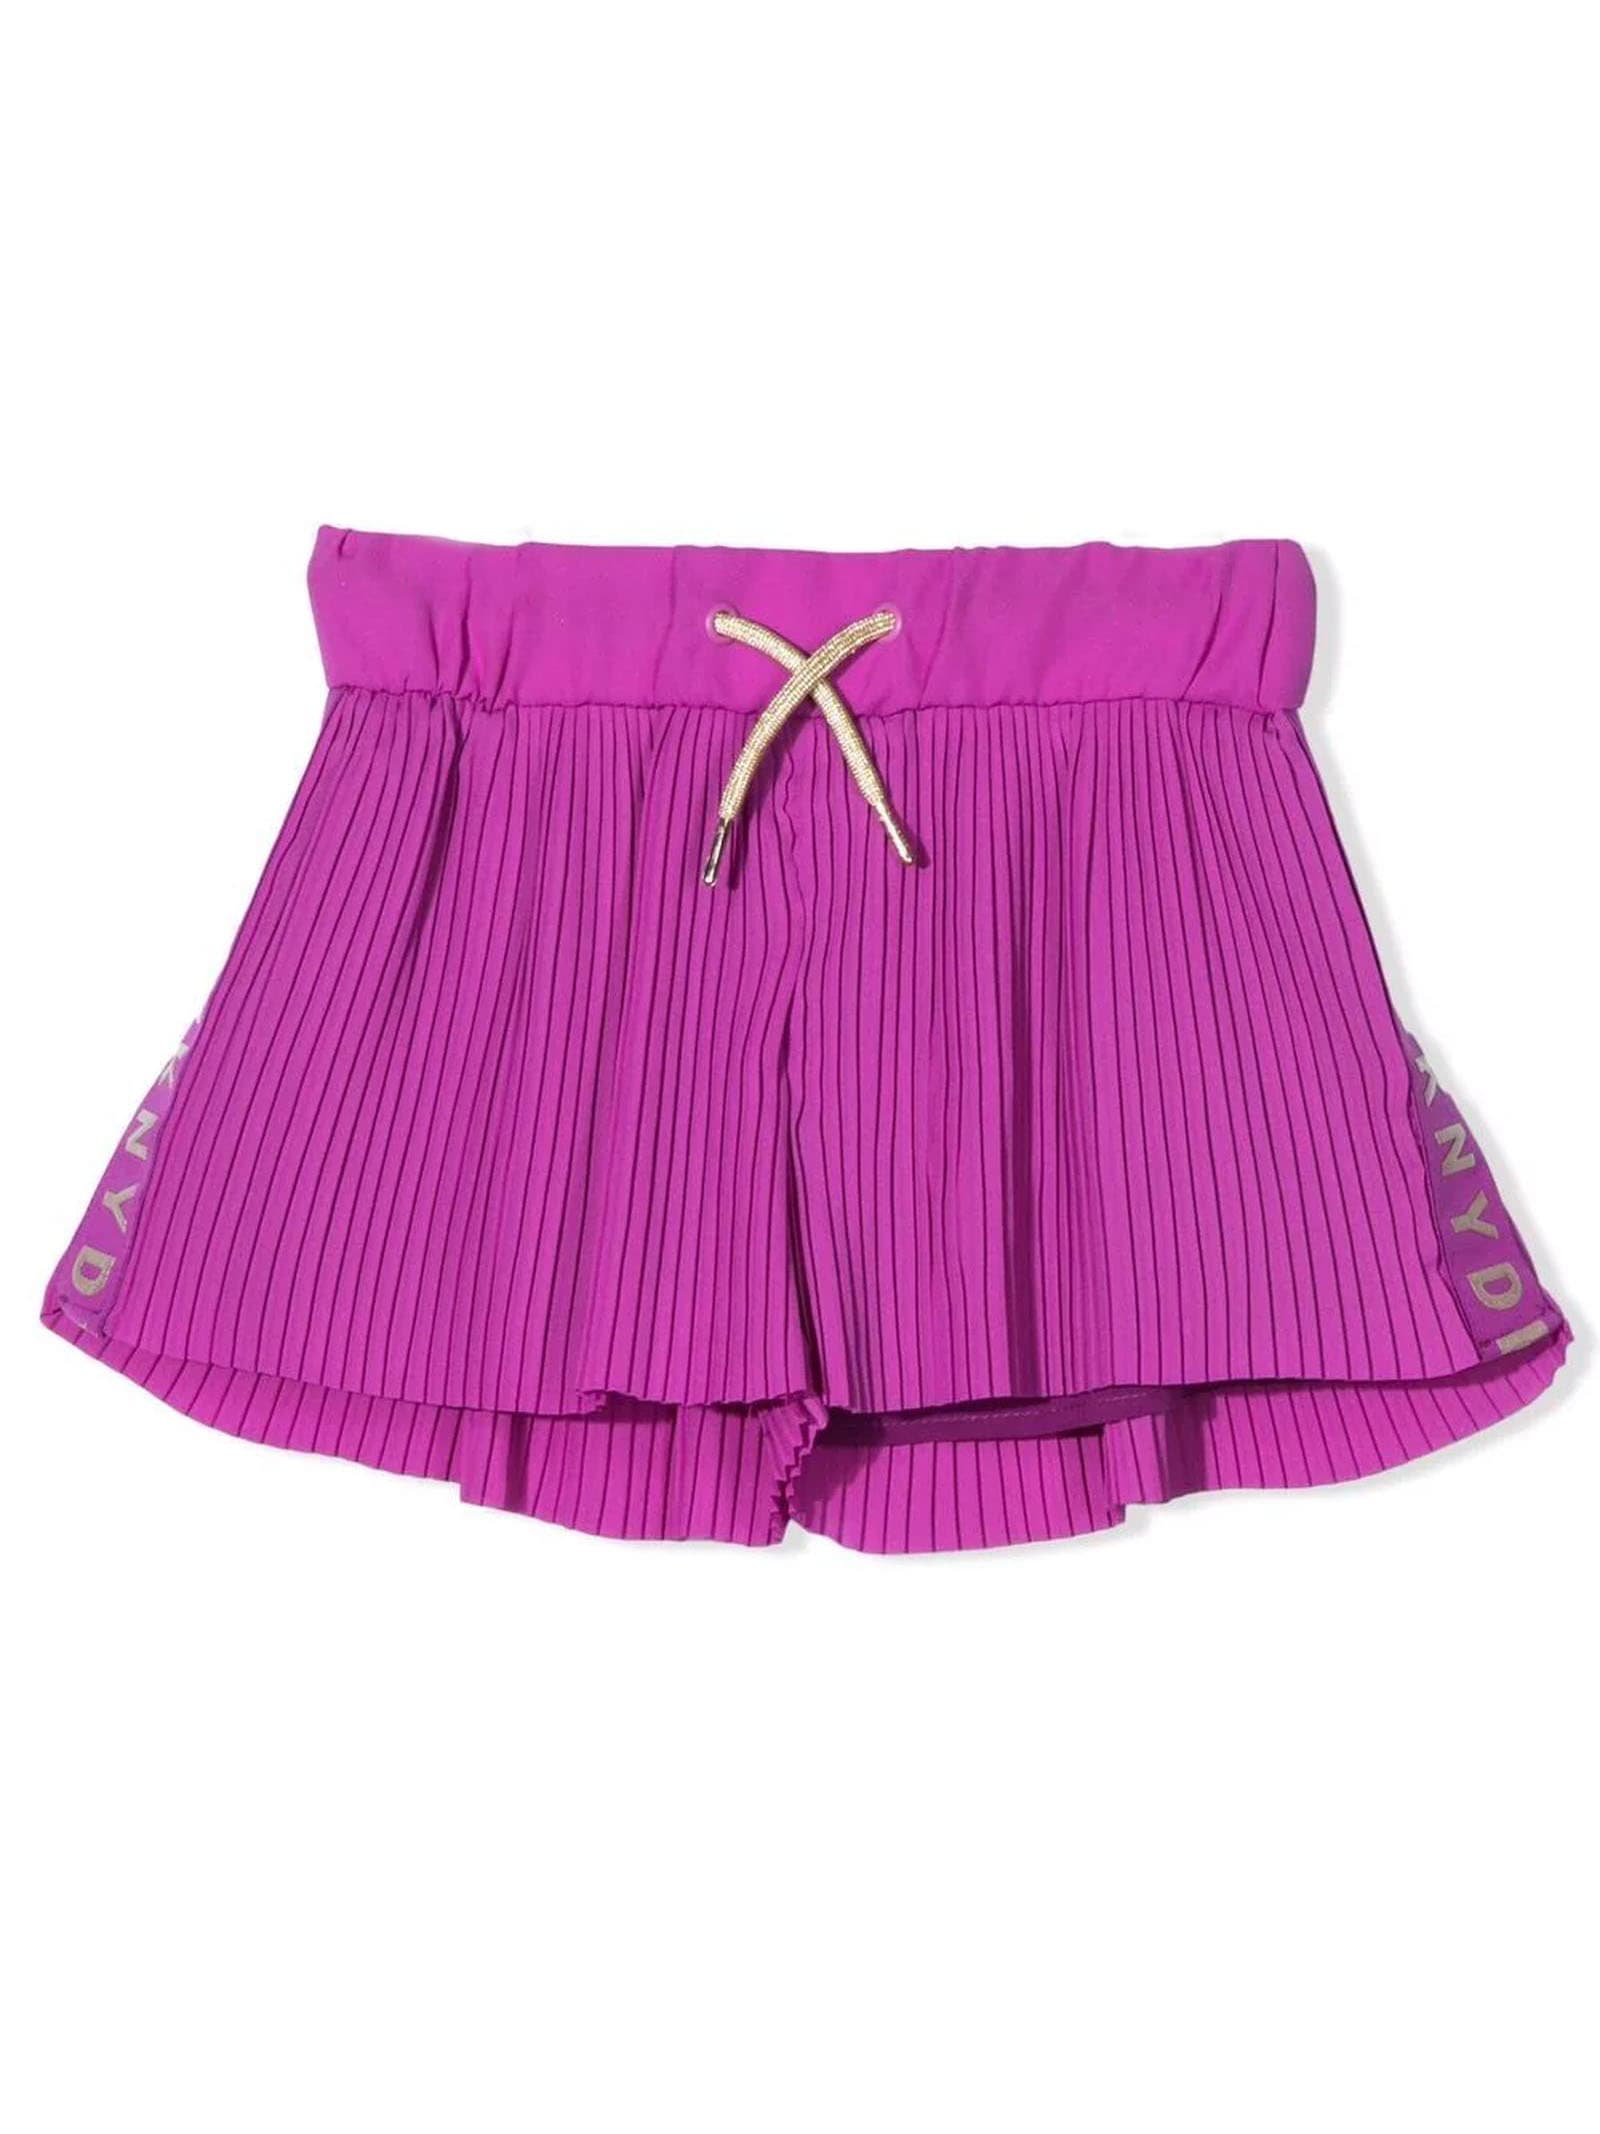 DKNY Purple Polyester Shorts